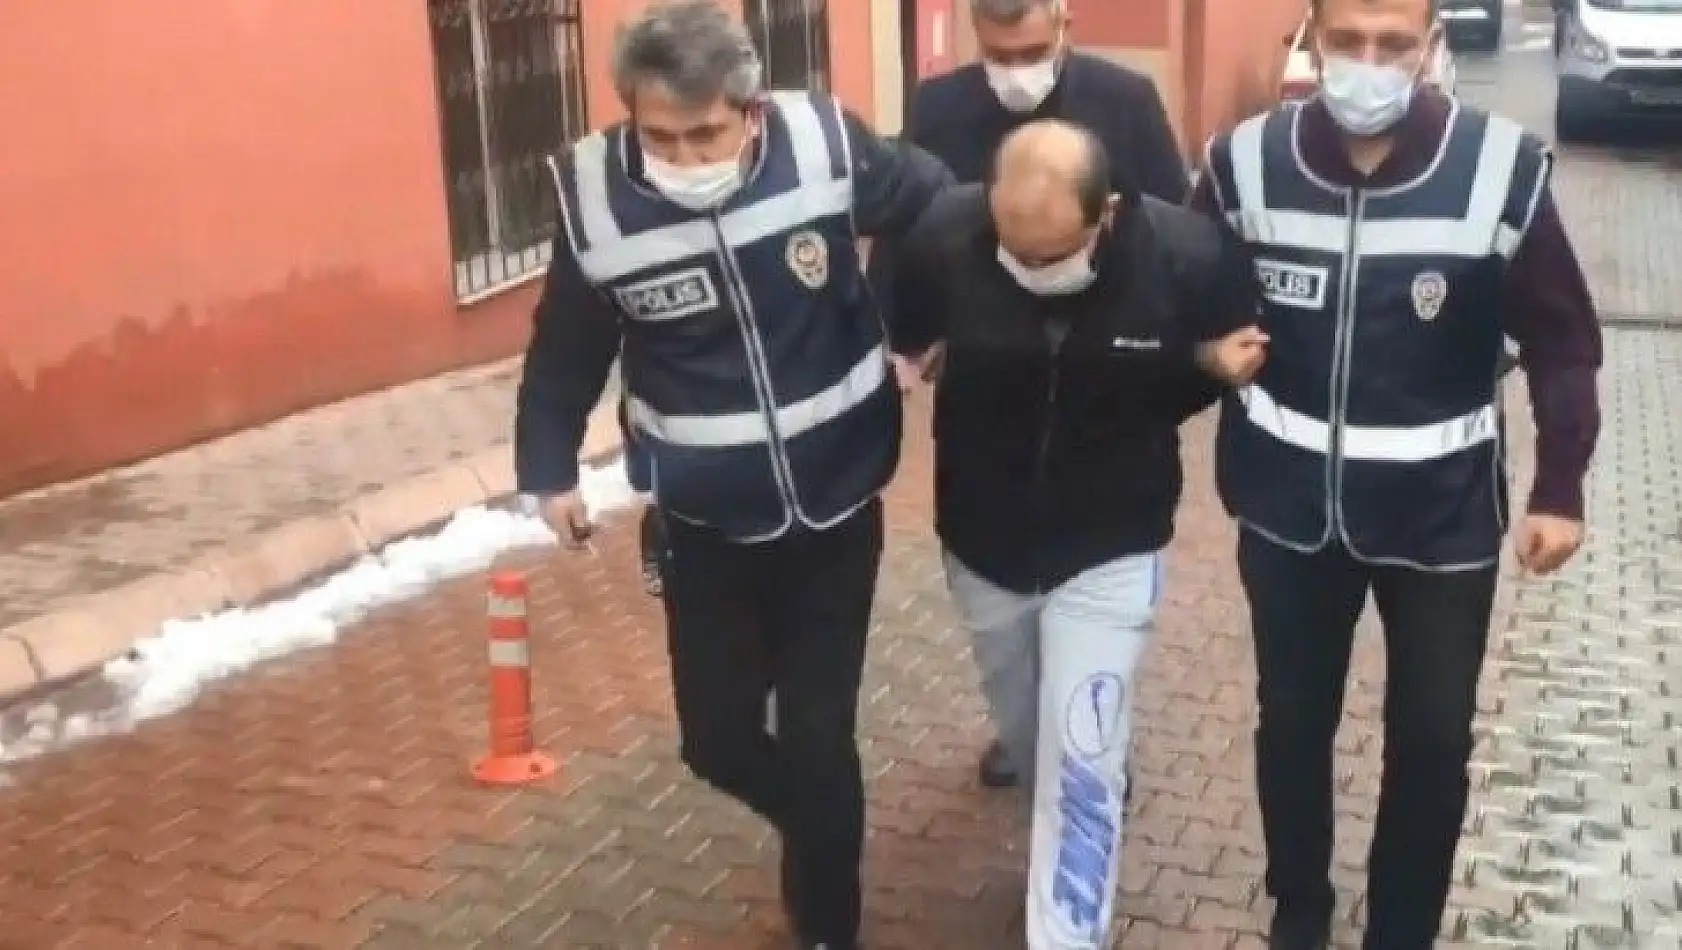 Firariyi polis yakaladı!